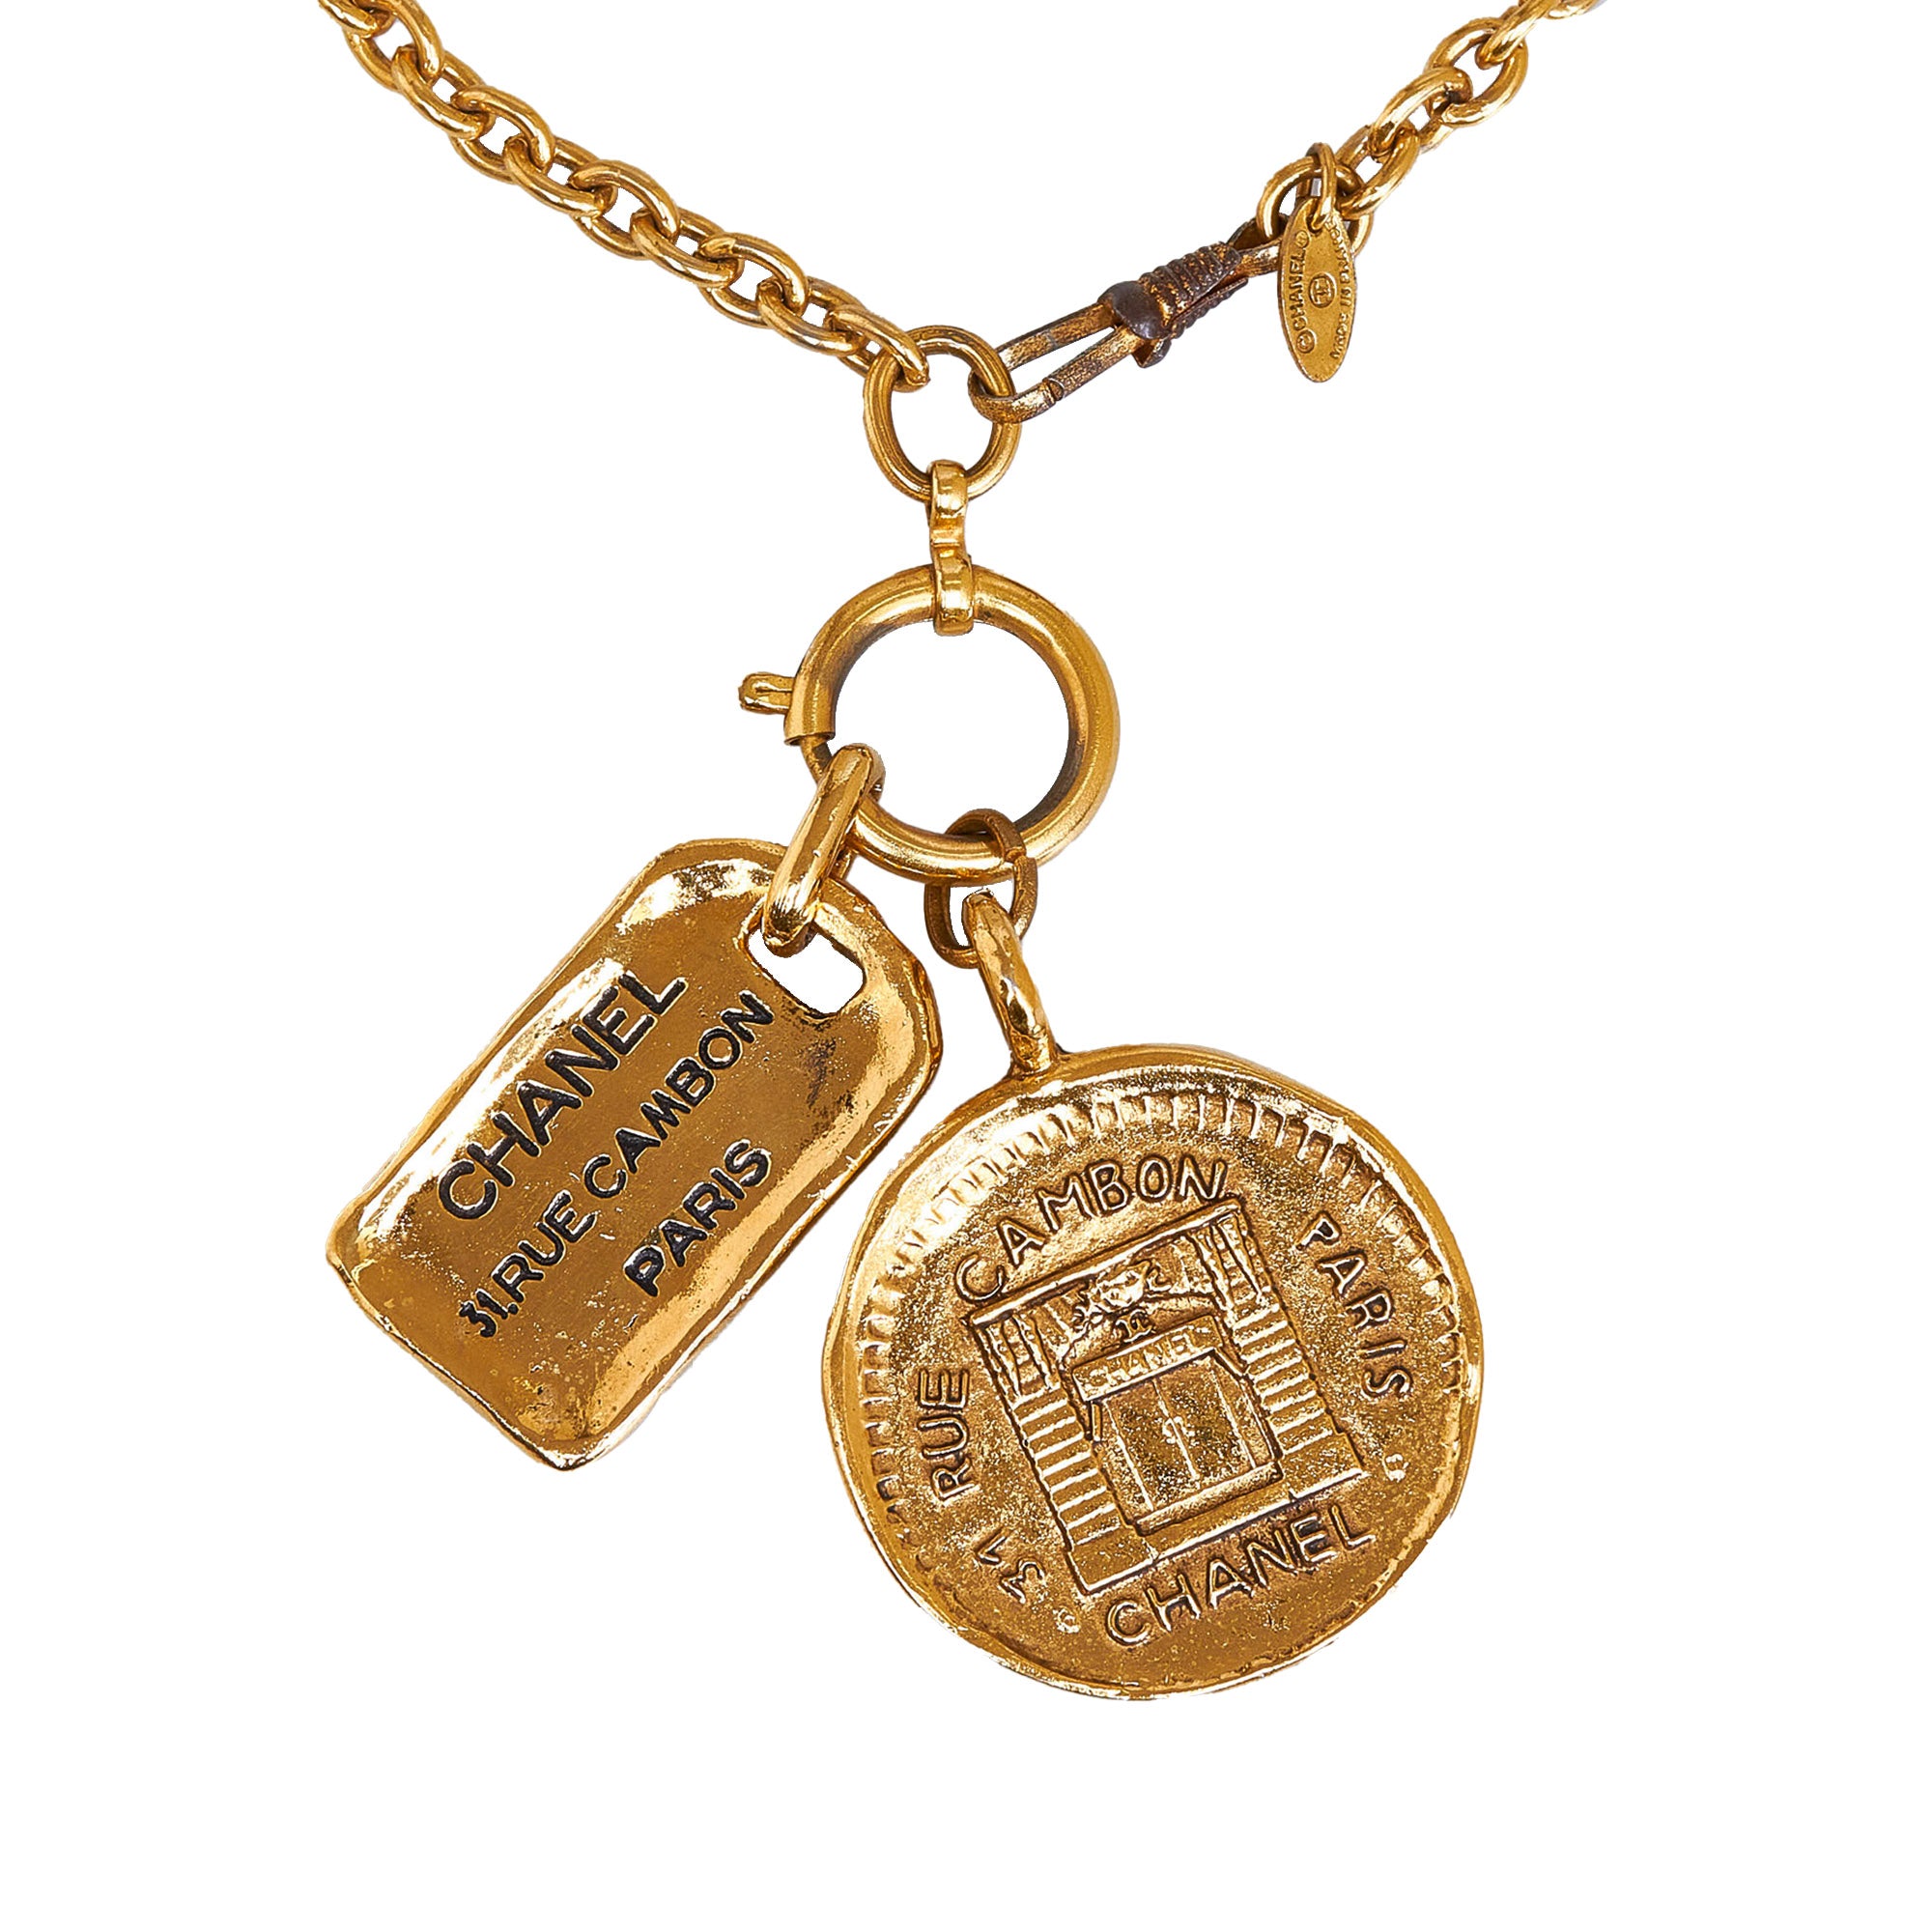 Essential necklace gold - CH Carolina Herrera United States